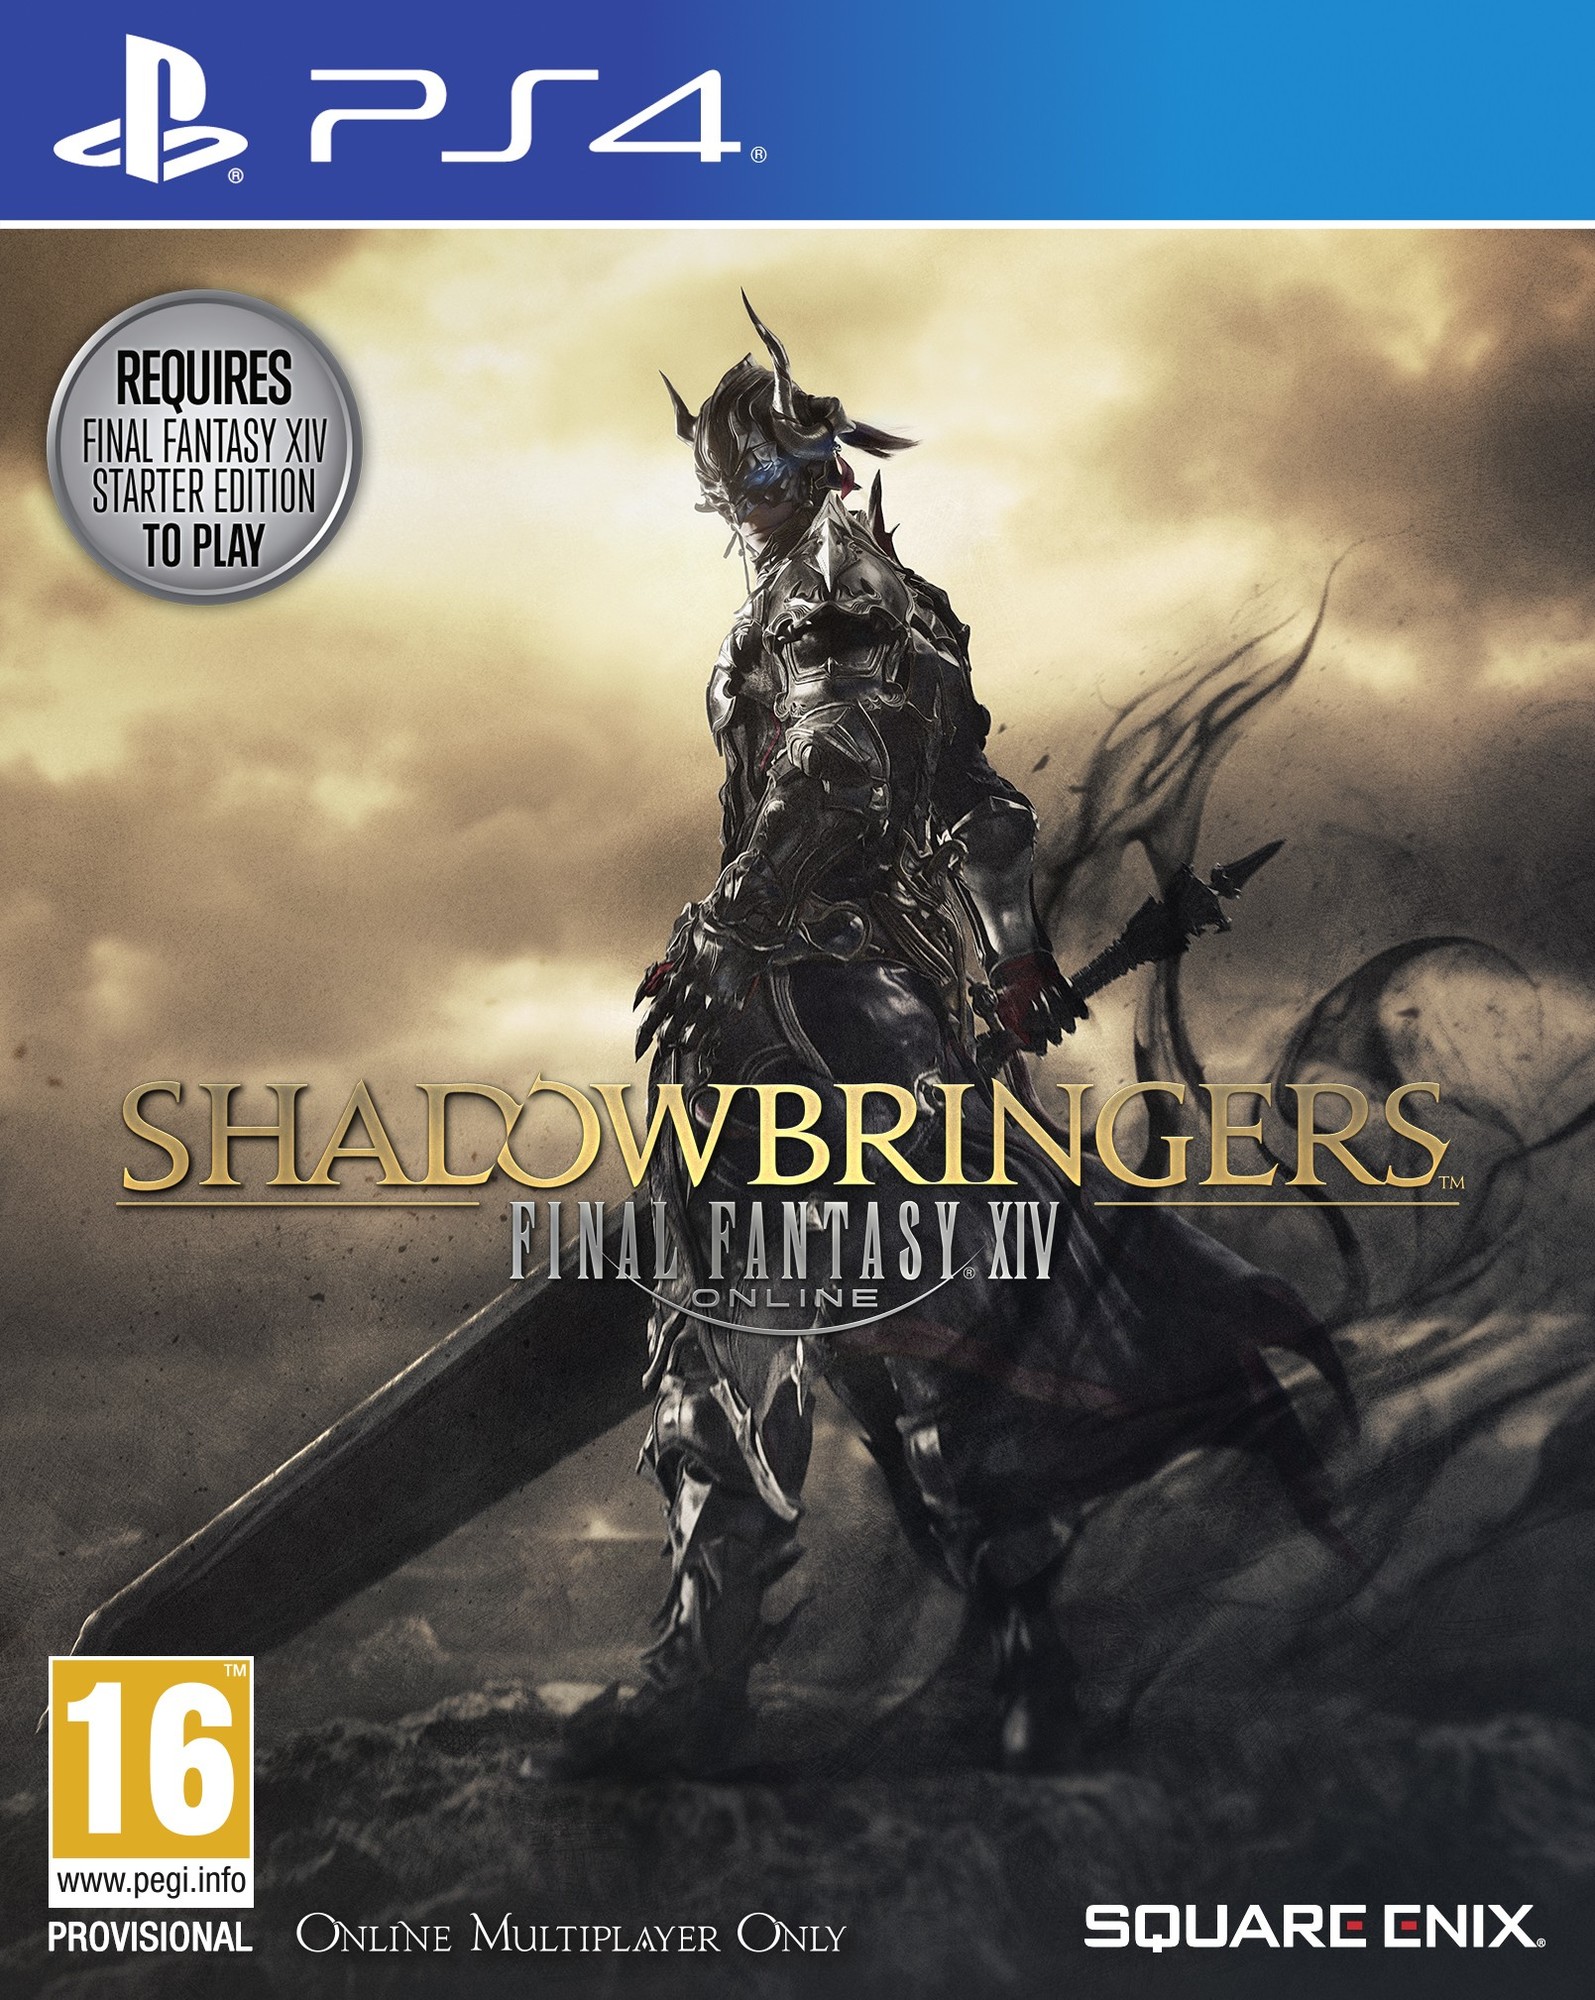 Final Fantasy XIV Online: Shadowbringers (PS4), Square Enix